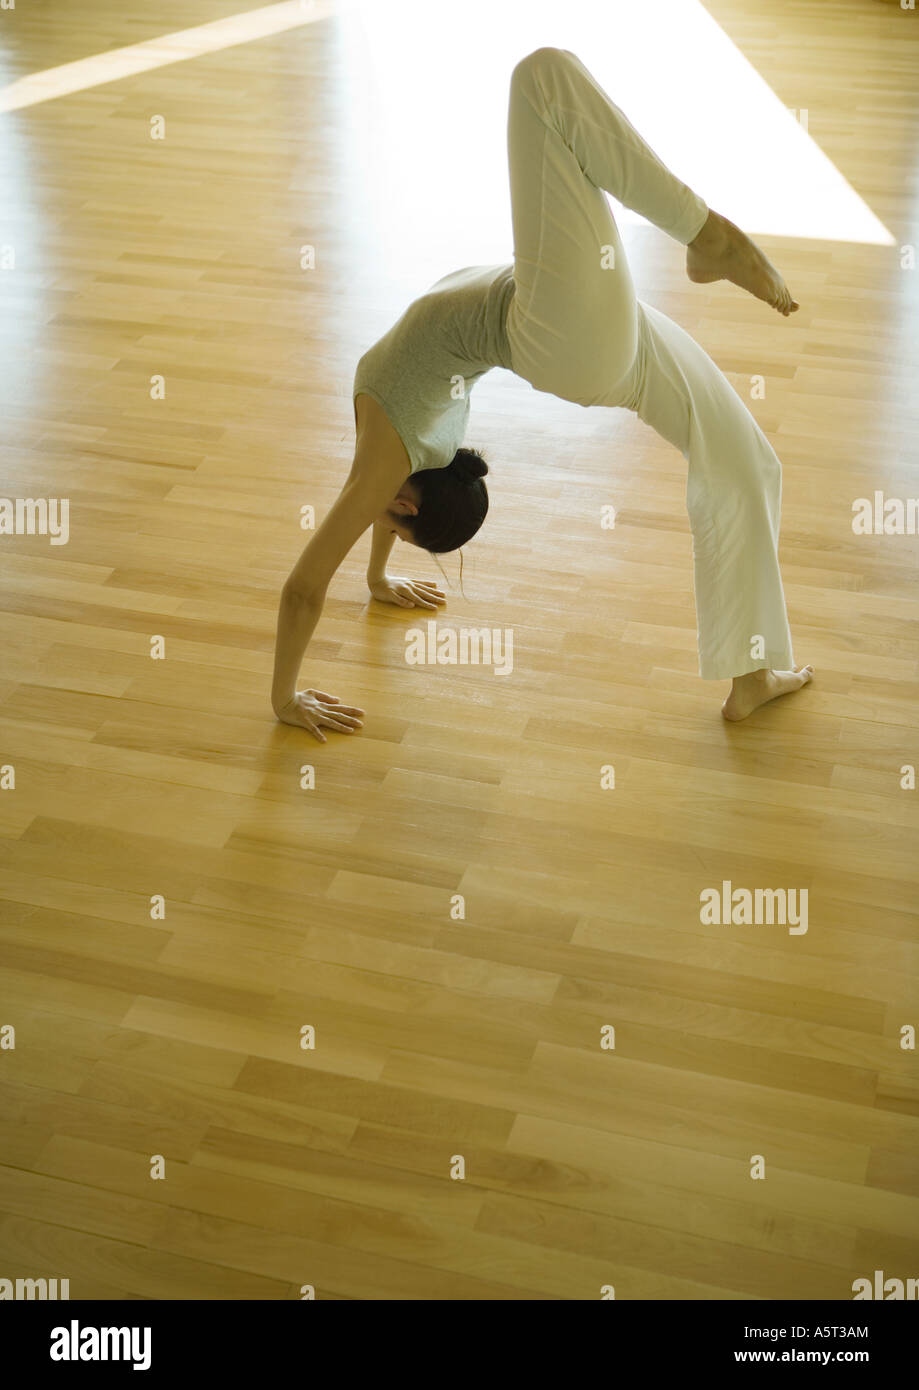 Yoga class, woman doing one-legged bridge pose Stock Photo